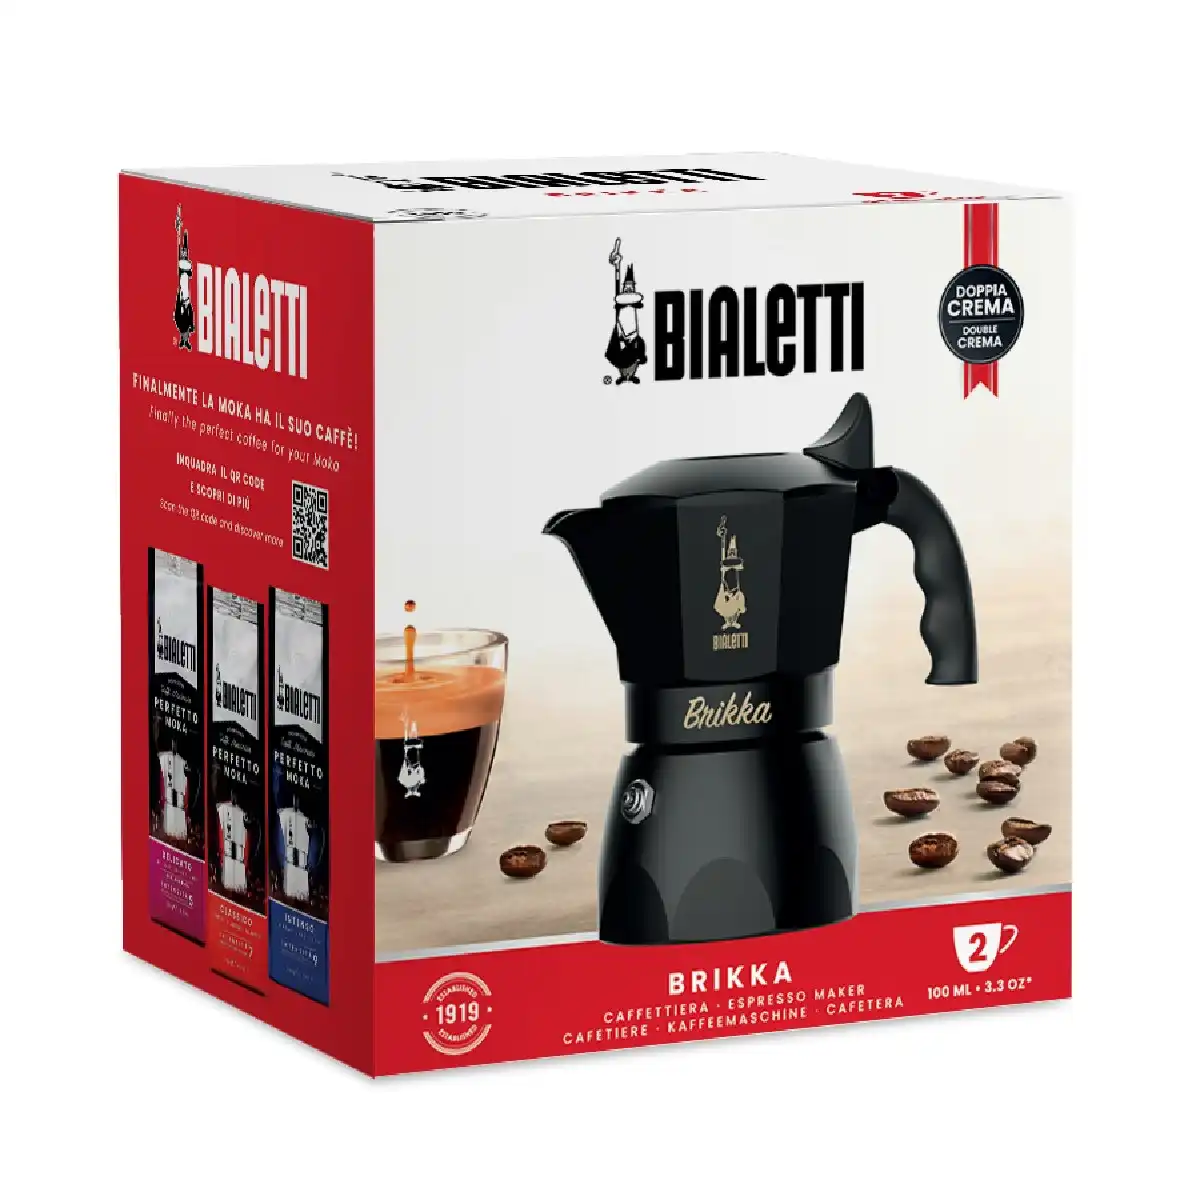 Bialetti Brikka 2 Cup Espresso Maker Black